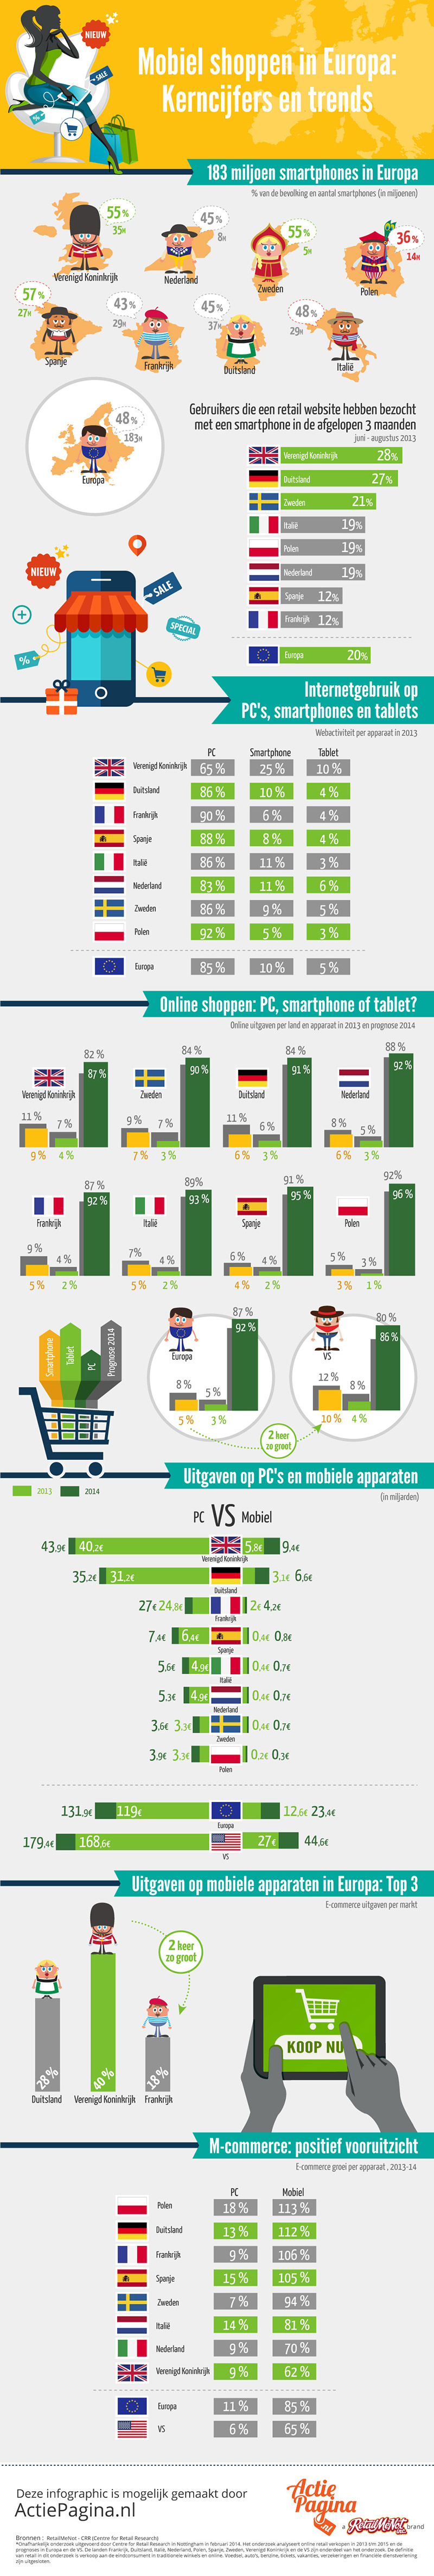 Infographic m-commerce